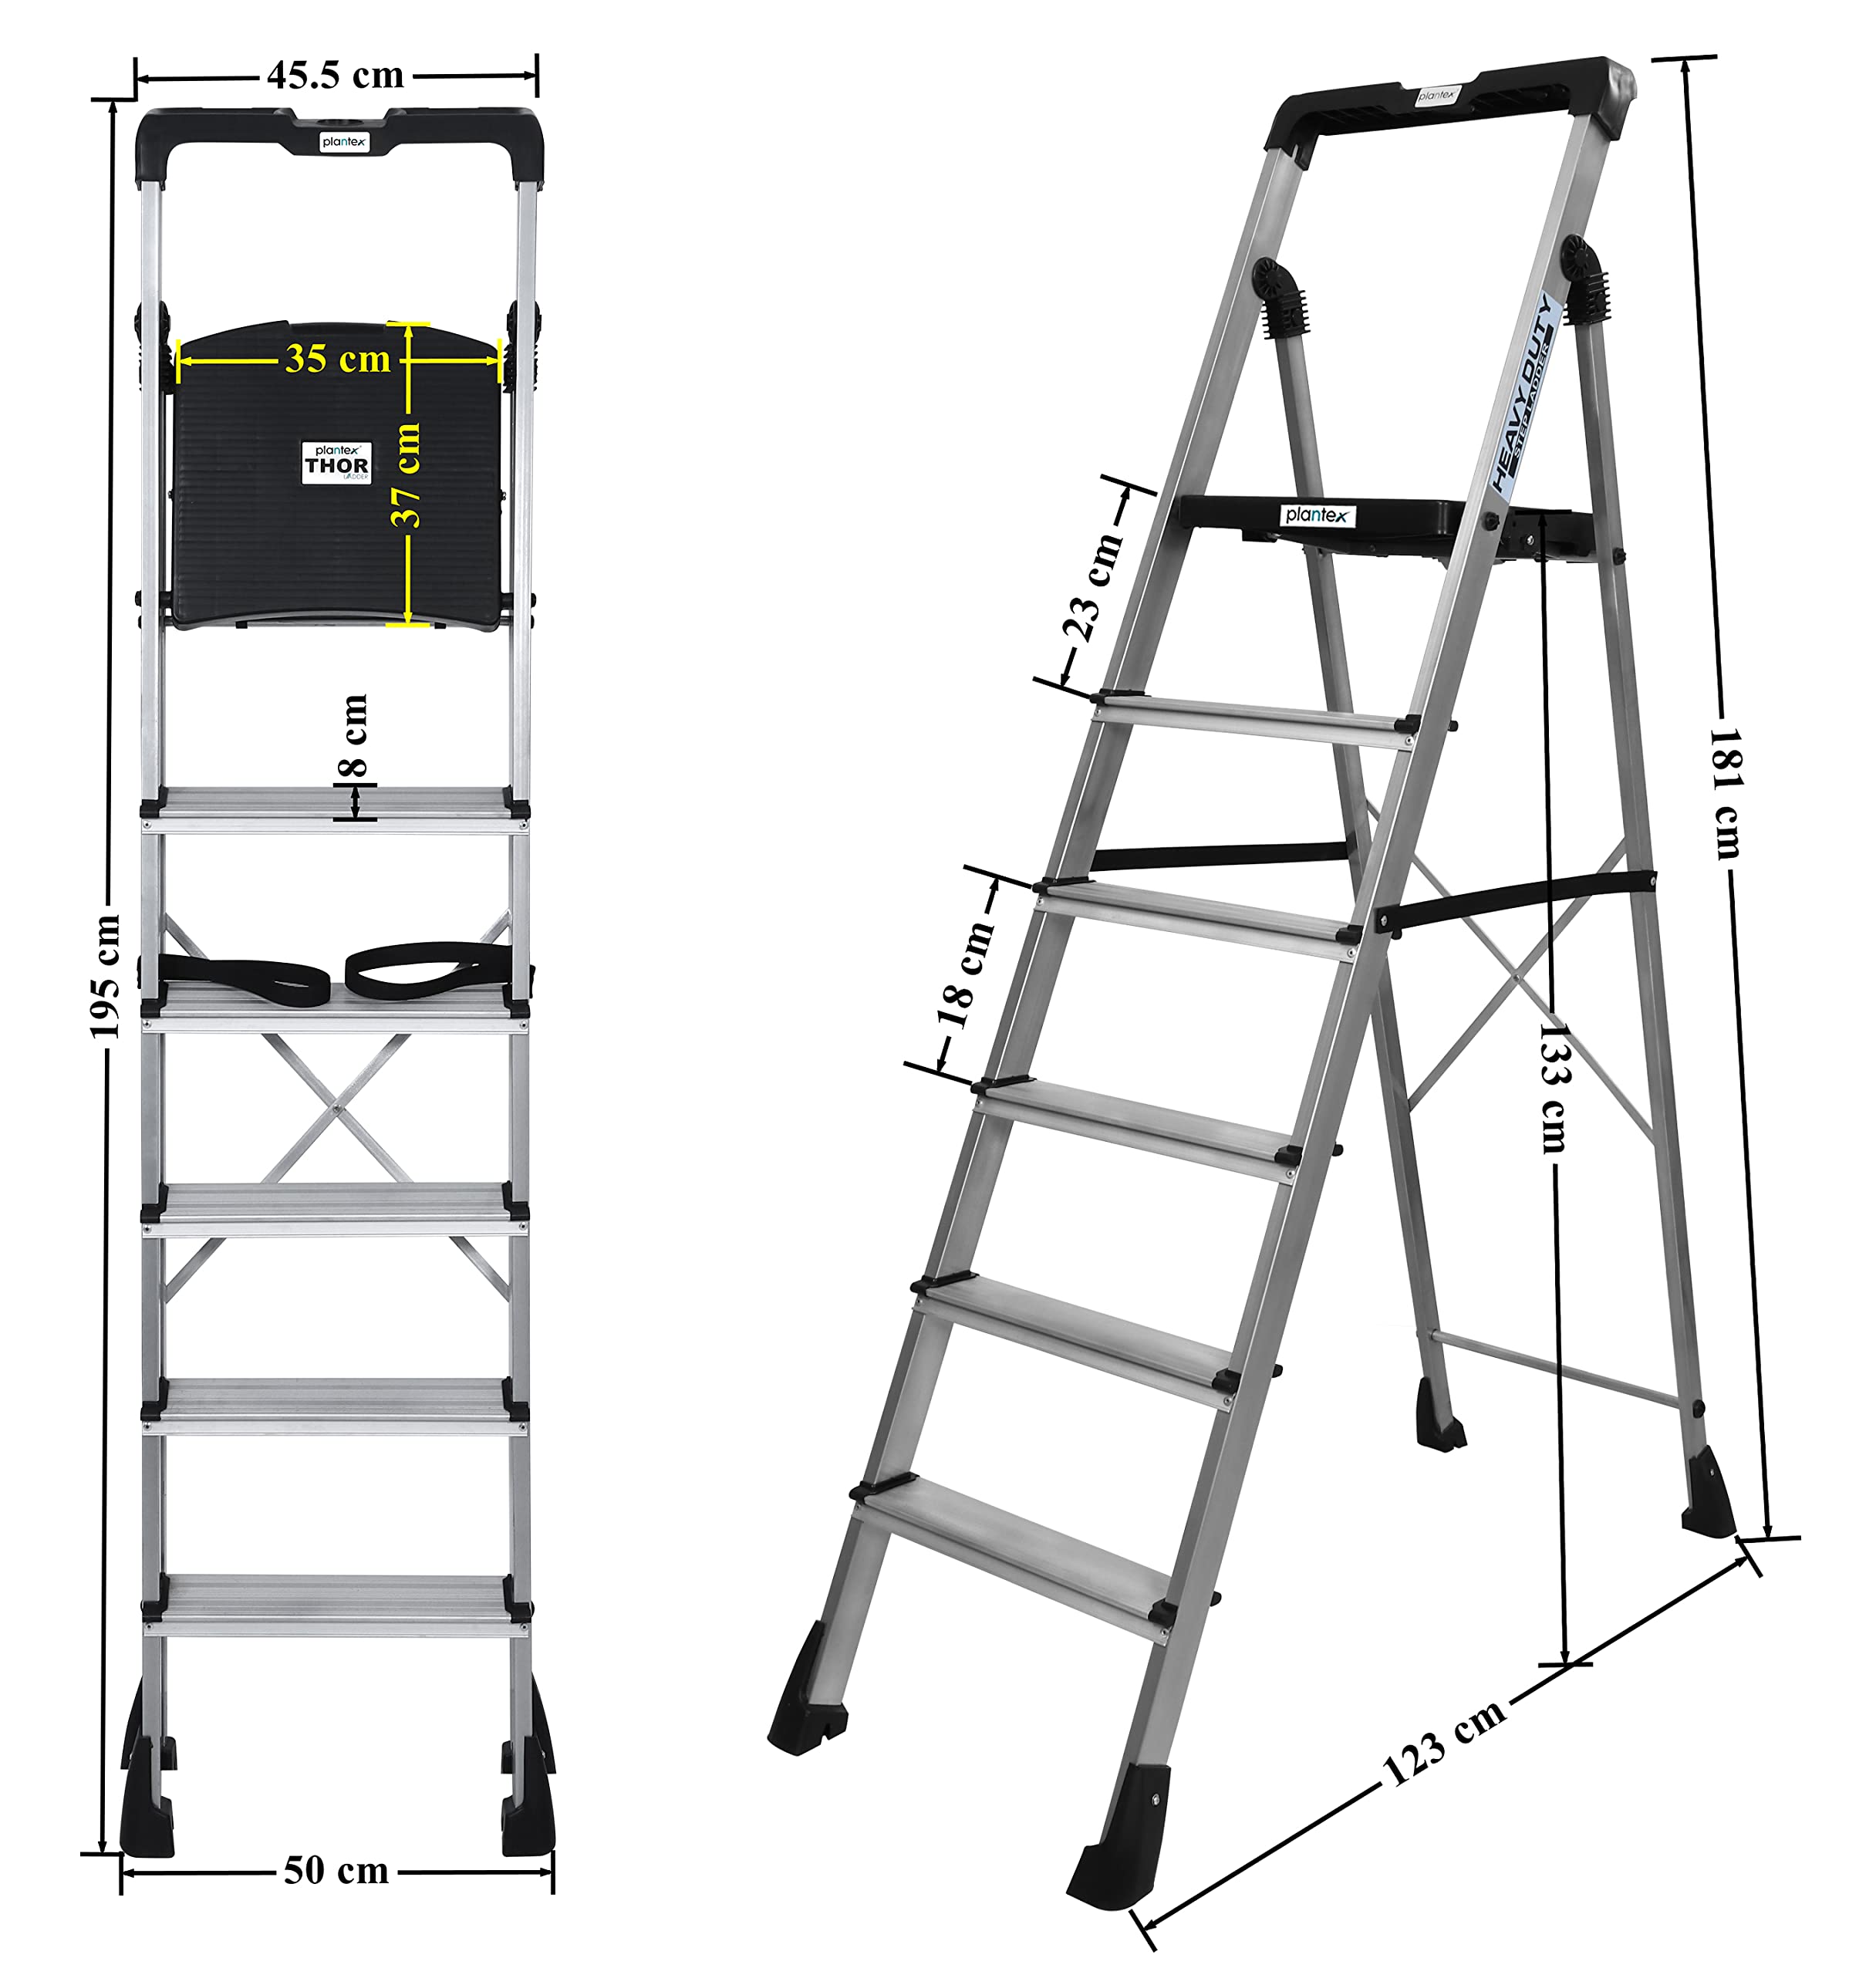 Plantex Thor Aluminium Step Folding Ladder 6 Step for Home with Advanced Locking System - Anti Slip 6 Step Ladder (Silver & Black)